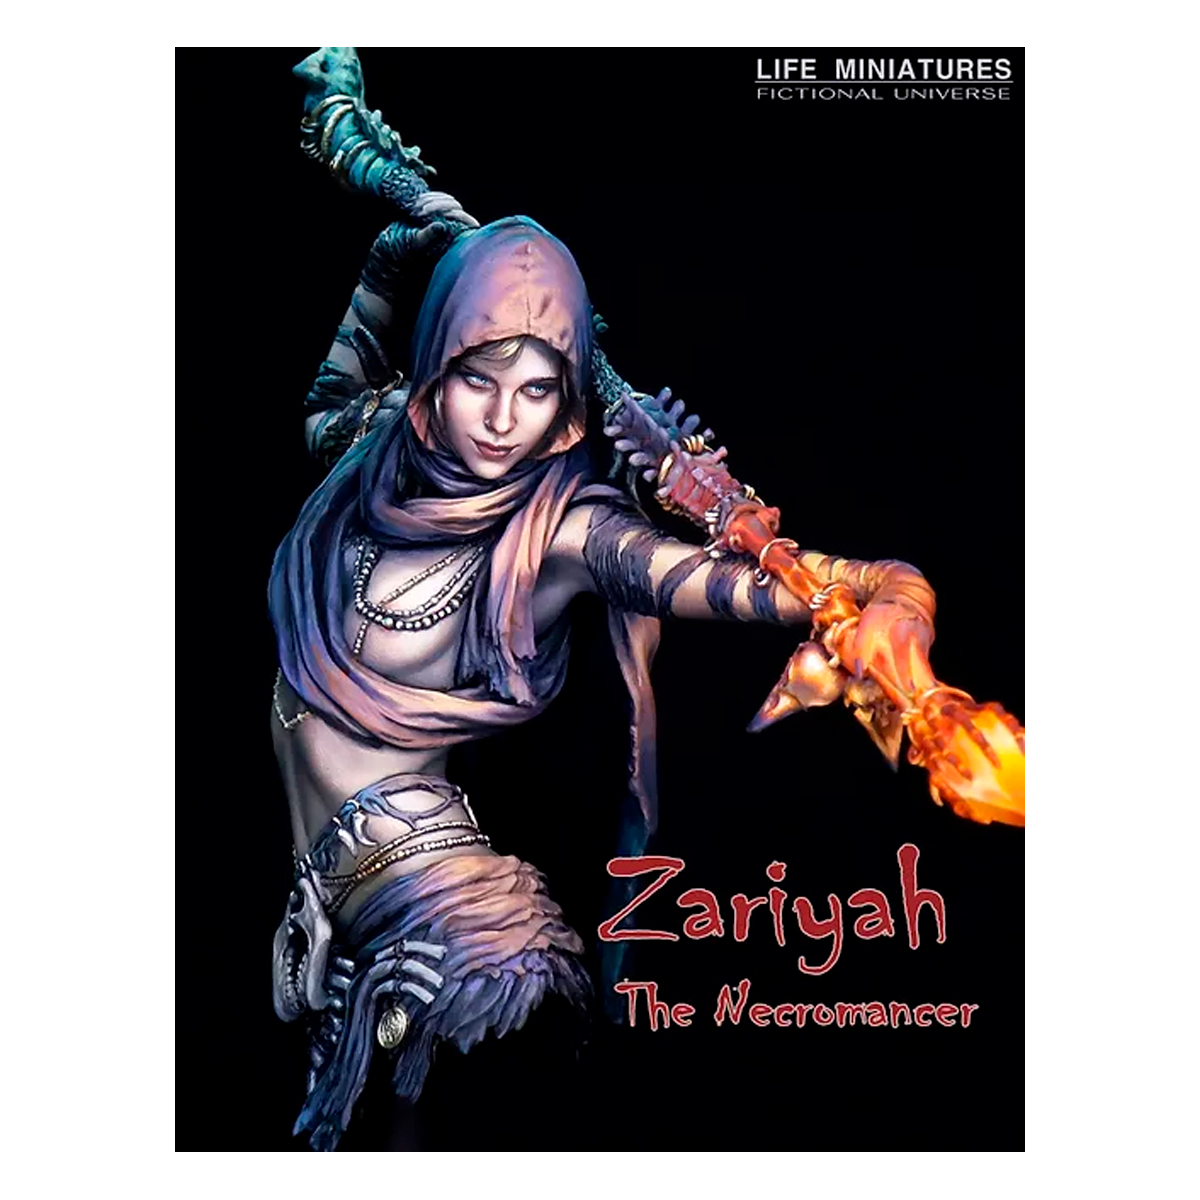 Life Miniatures – ‘Zariyah’ The Necromancer 1/12